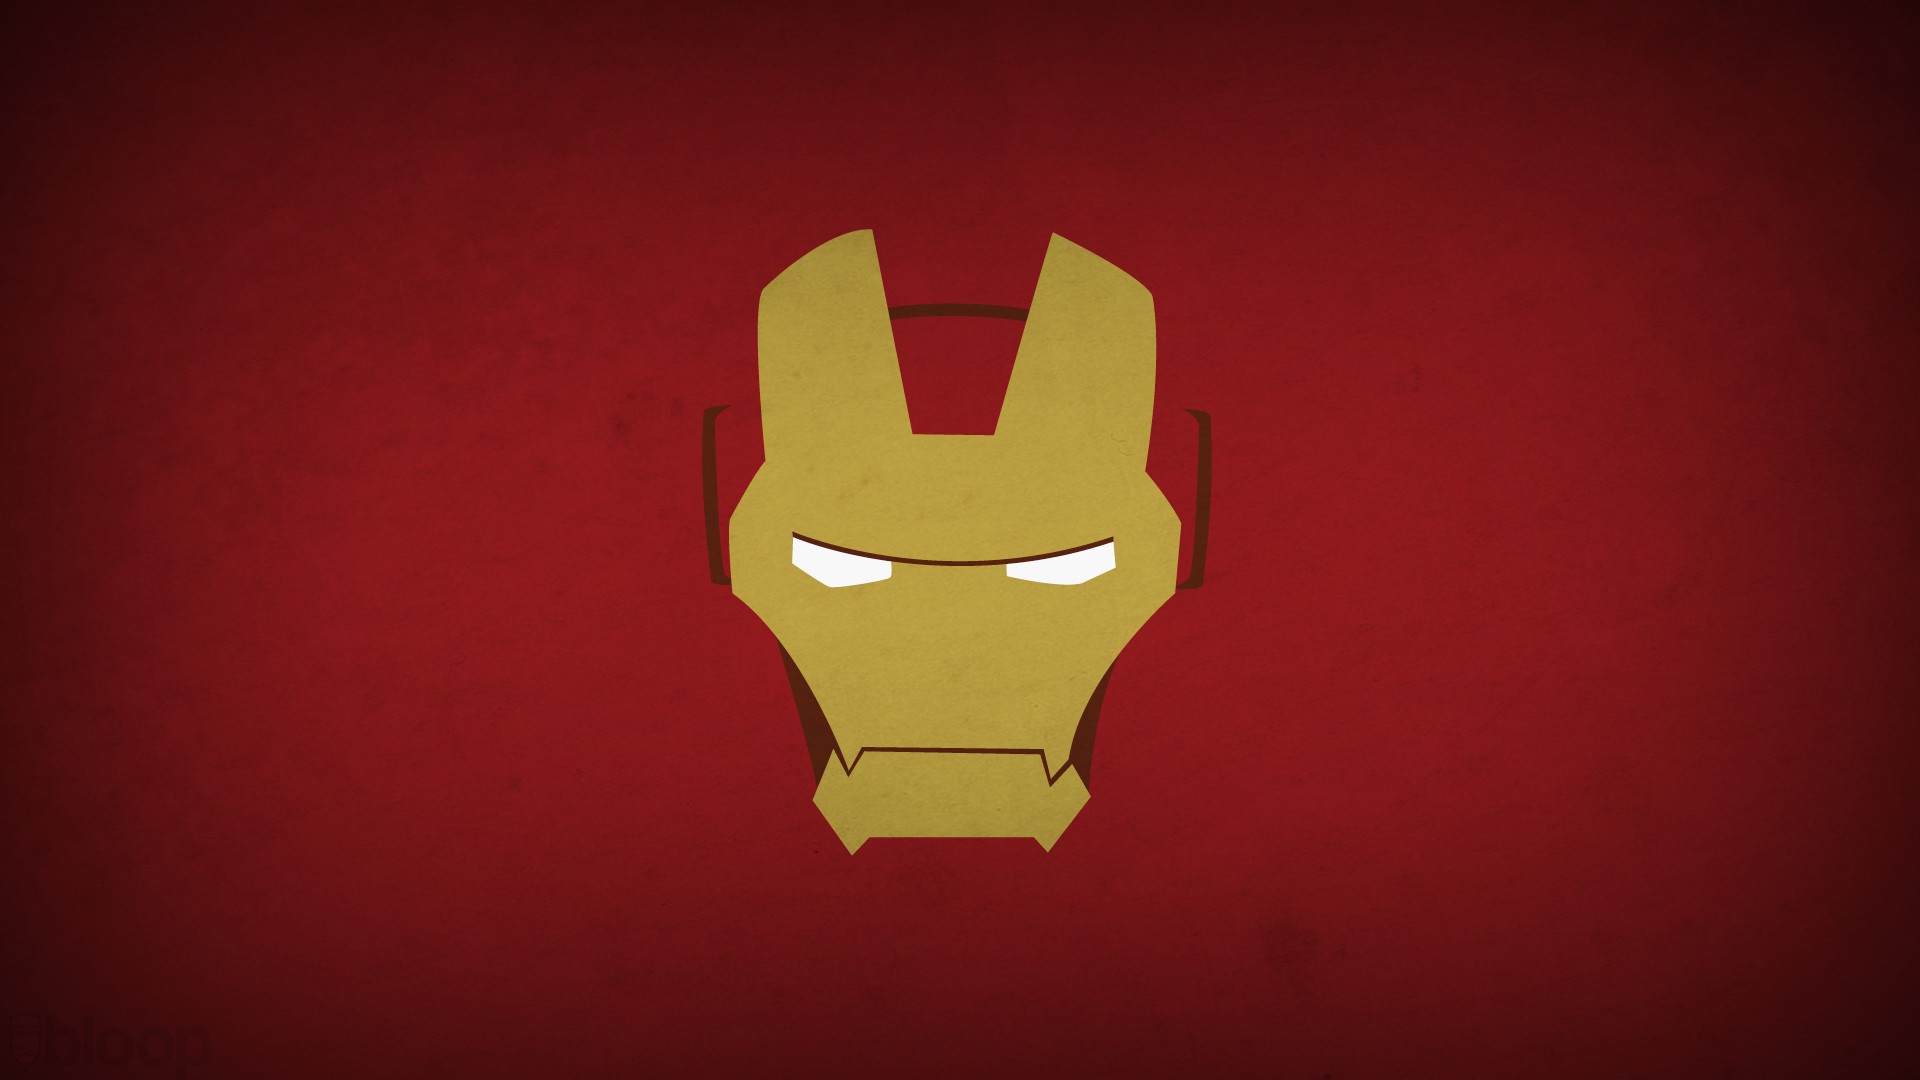 Wallpapers Minimalistic Marvel Iron Man Superheroes Comics Red .4